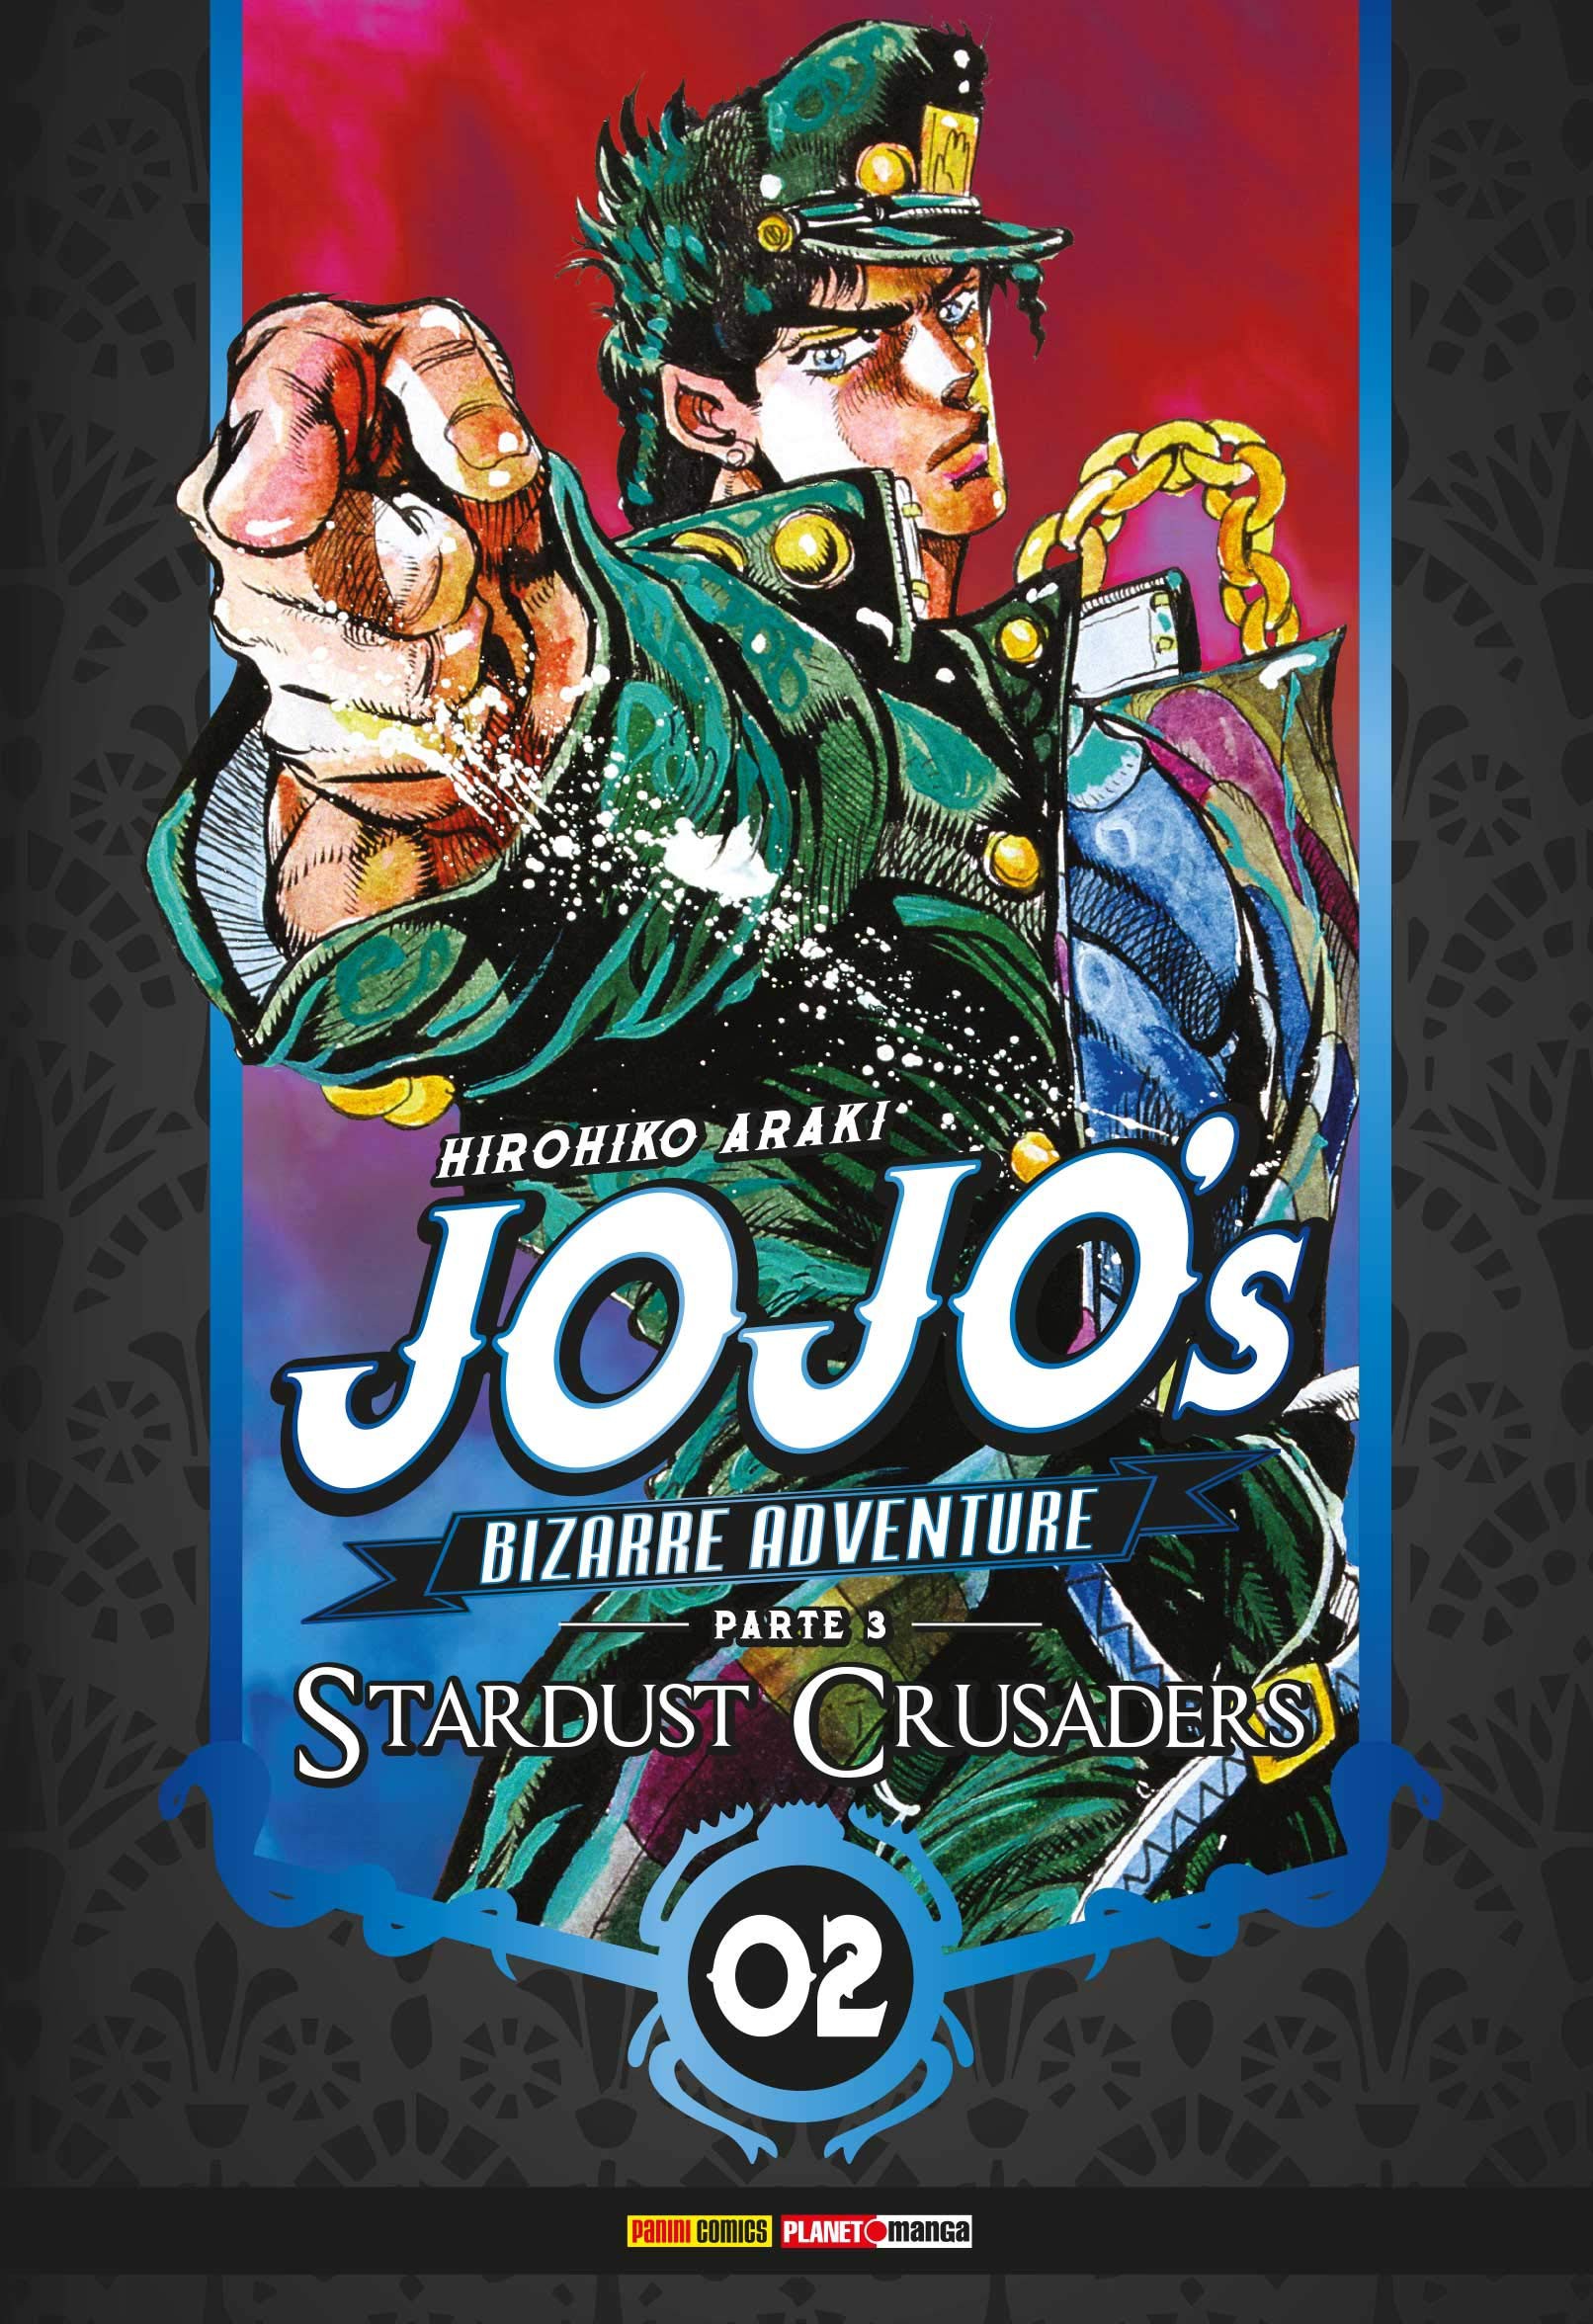 Jojo's Bizarre Adventure Part 3- Stardust Crusaders